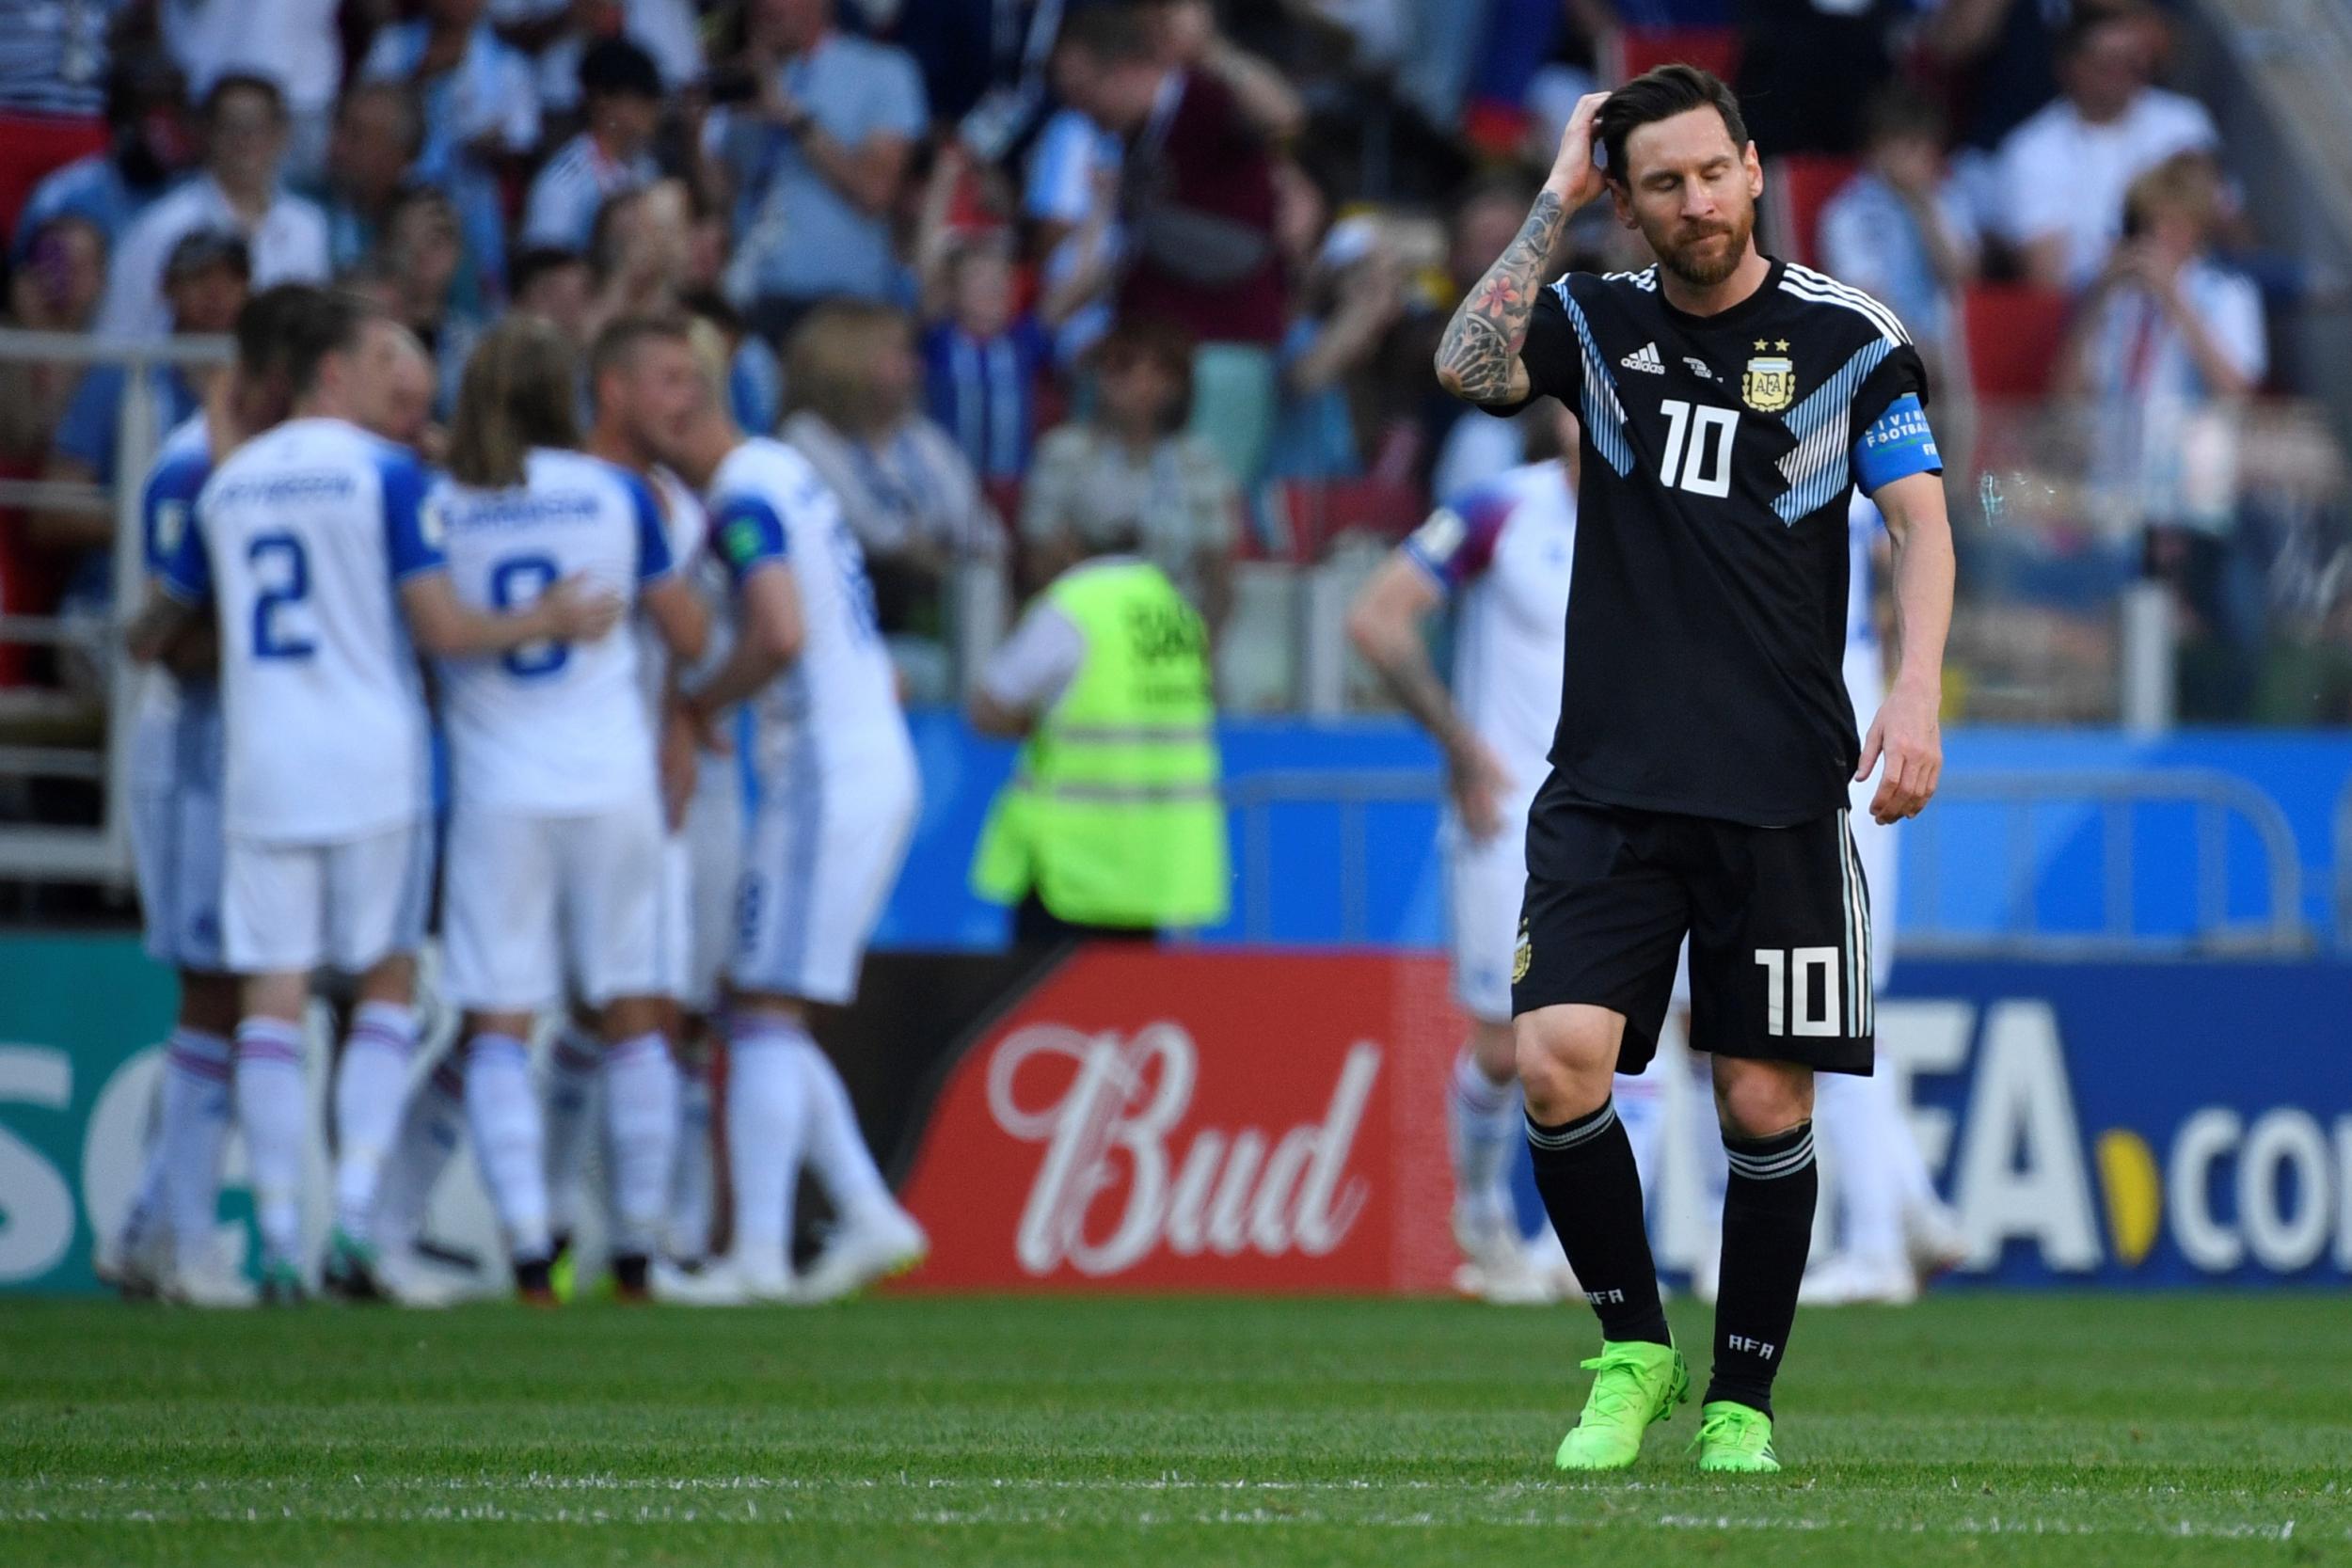 Argentina vs Iceland LIVE World Cup 2018: Lionel Messi starts - latest